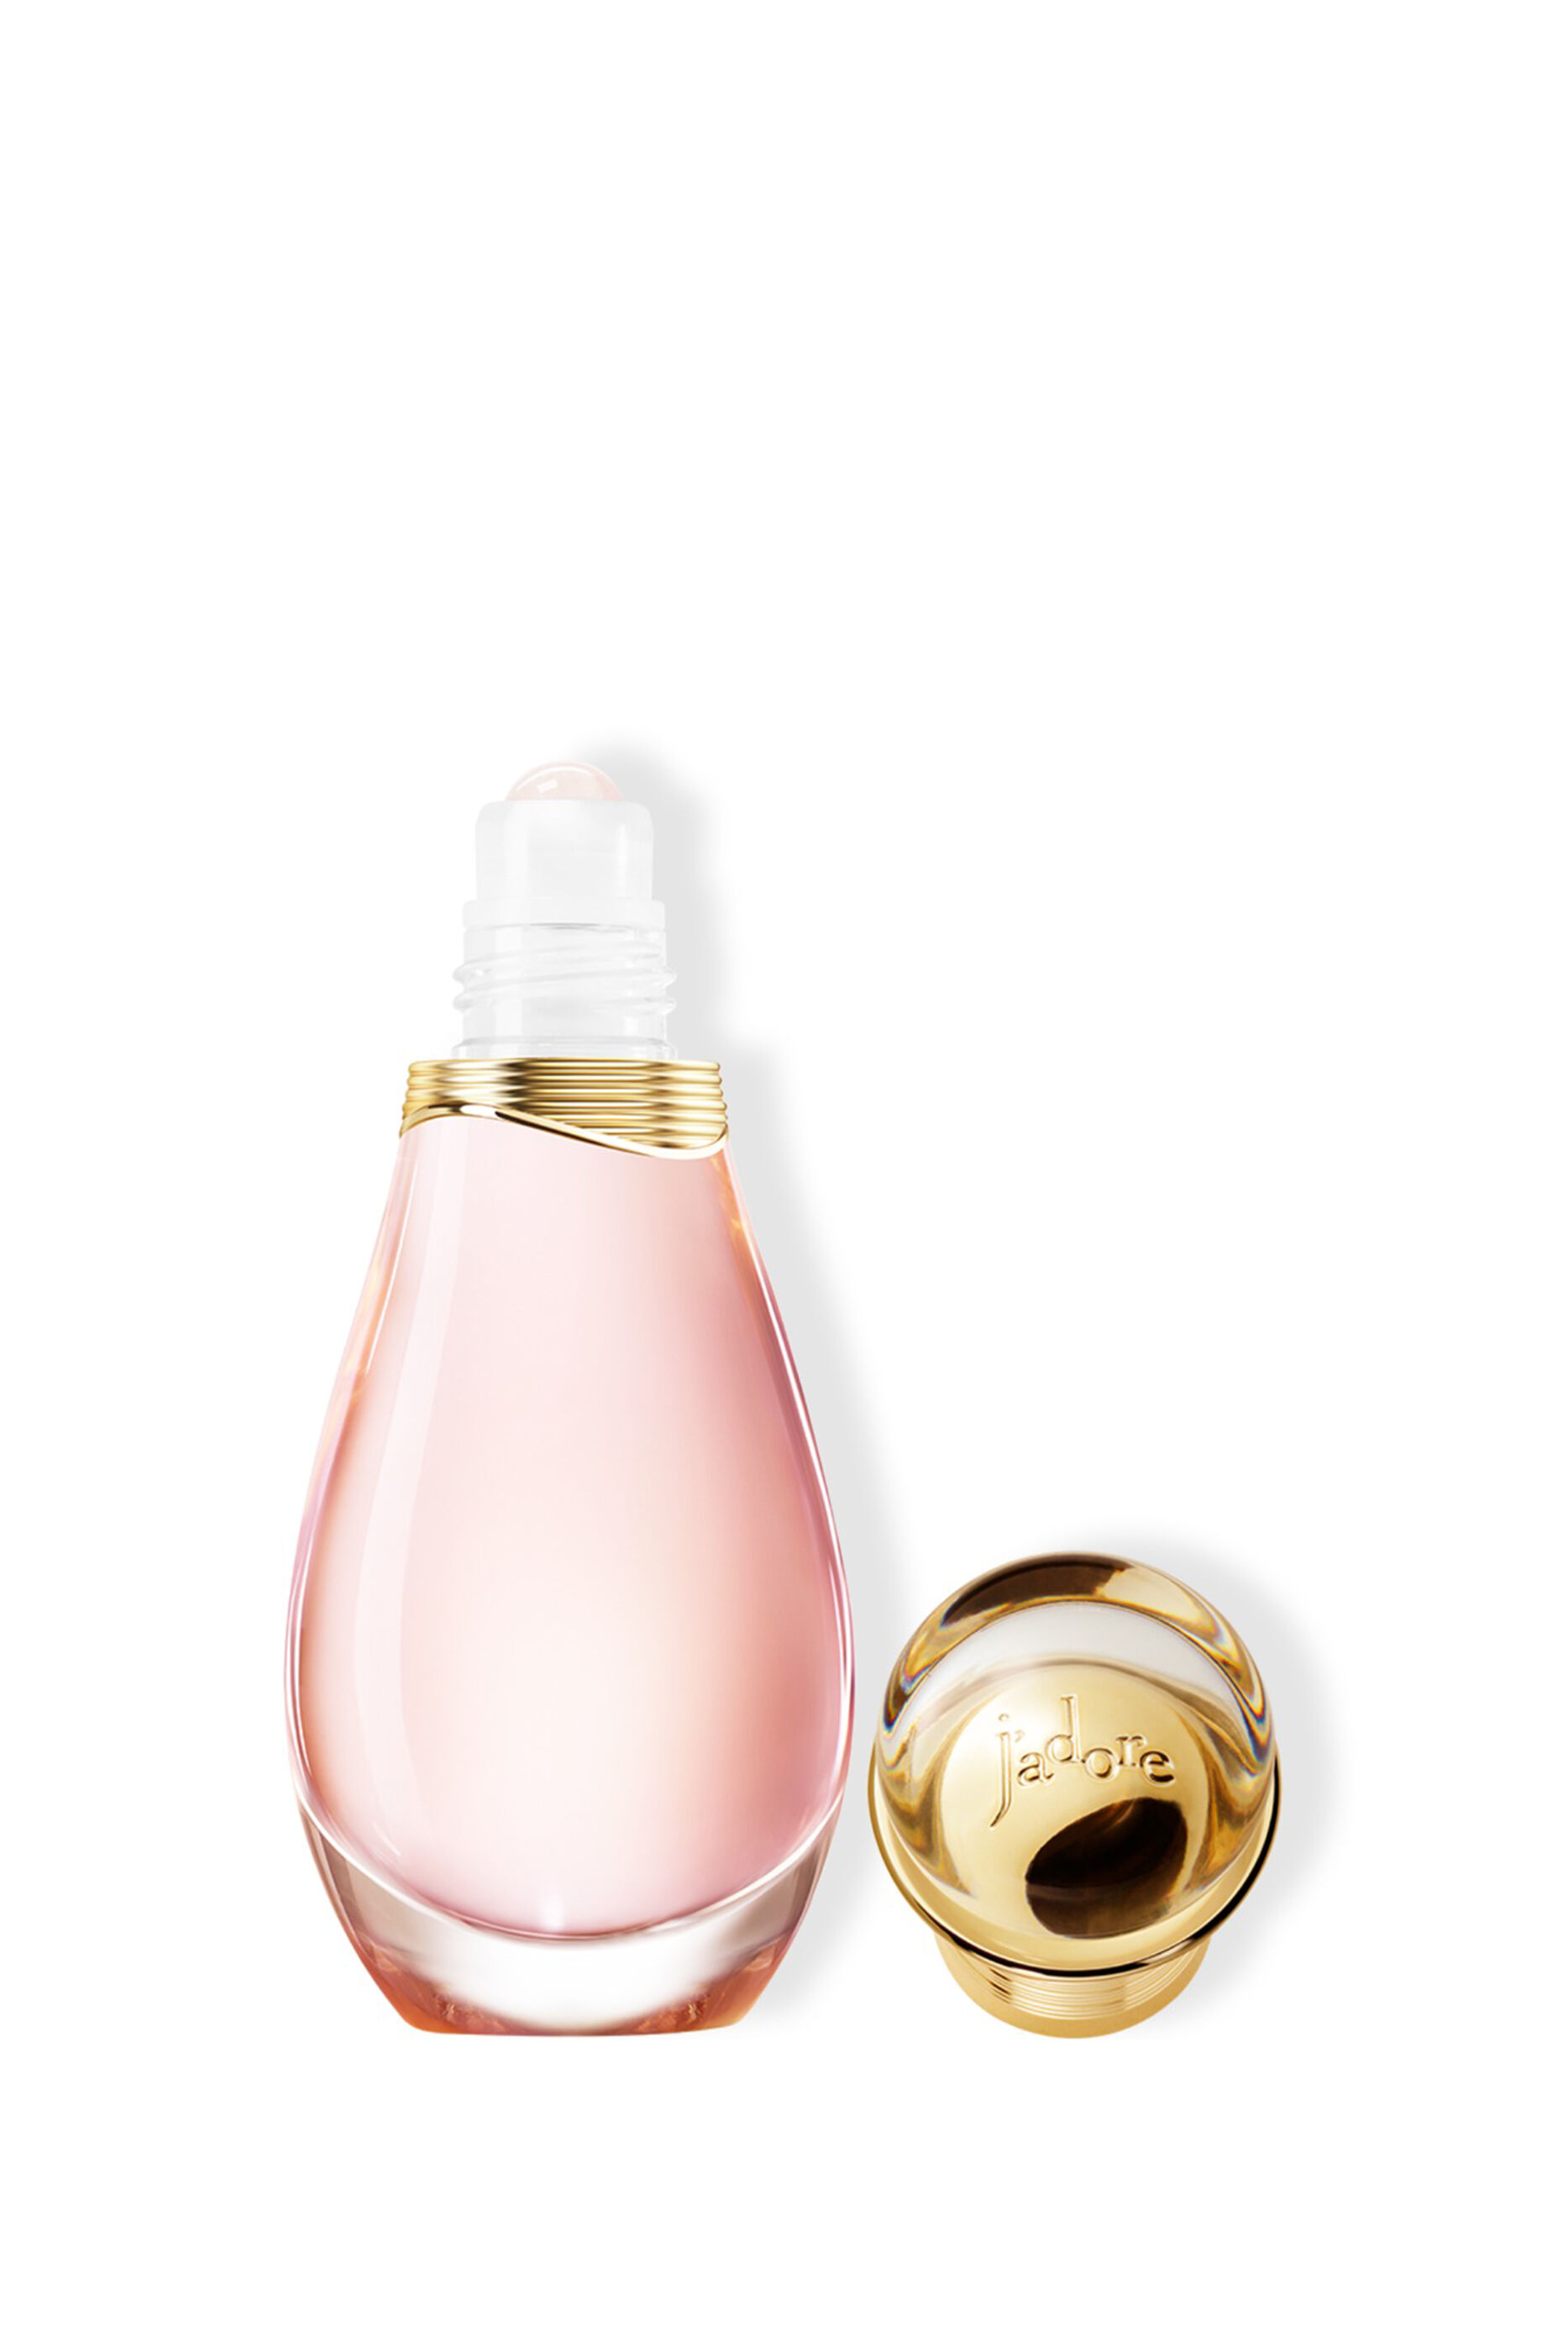 Amazoncom  Christian Dior Jadore Eau de Toilette Spray for Women 17  Ounce  Beauty  Personal Care